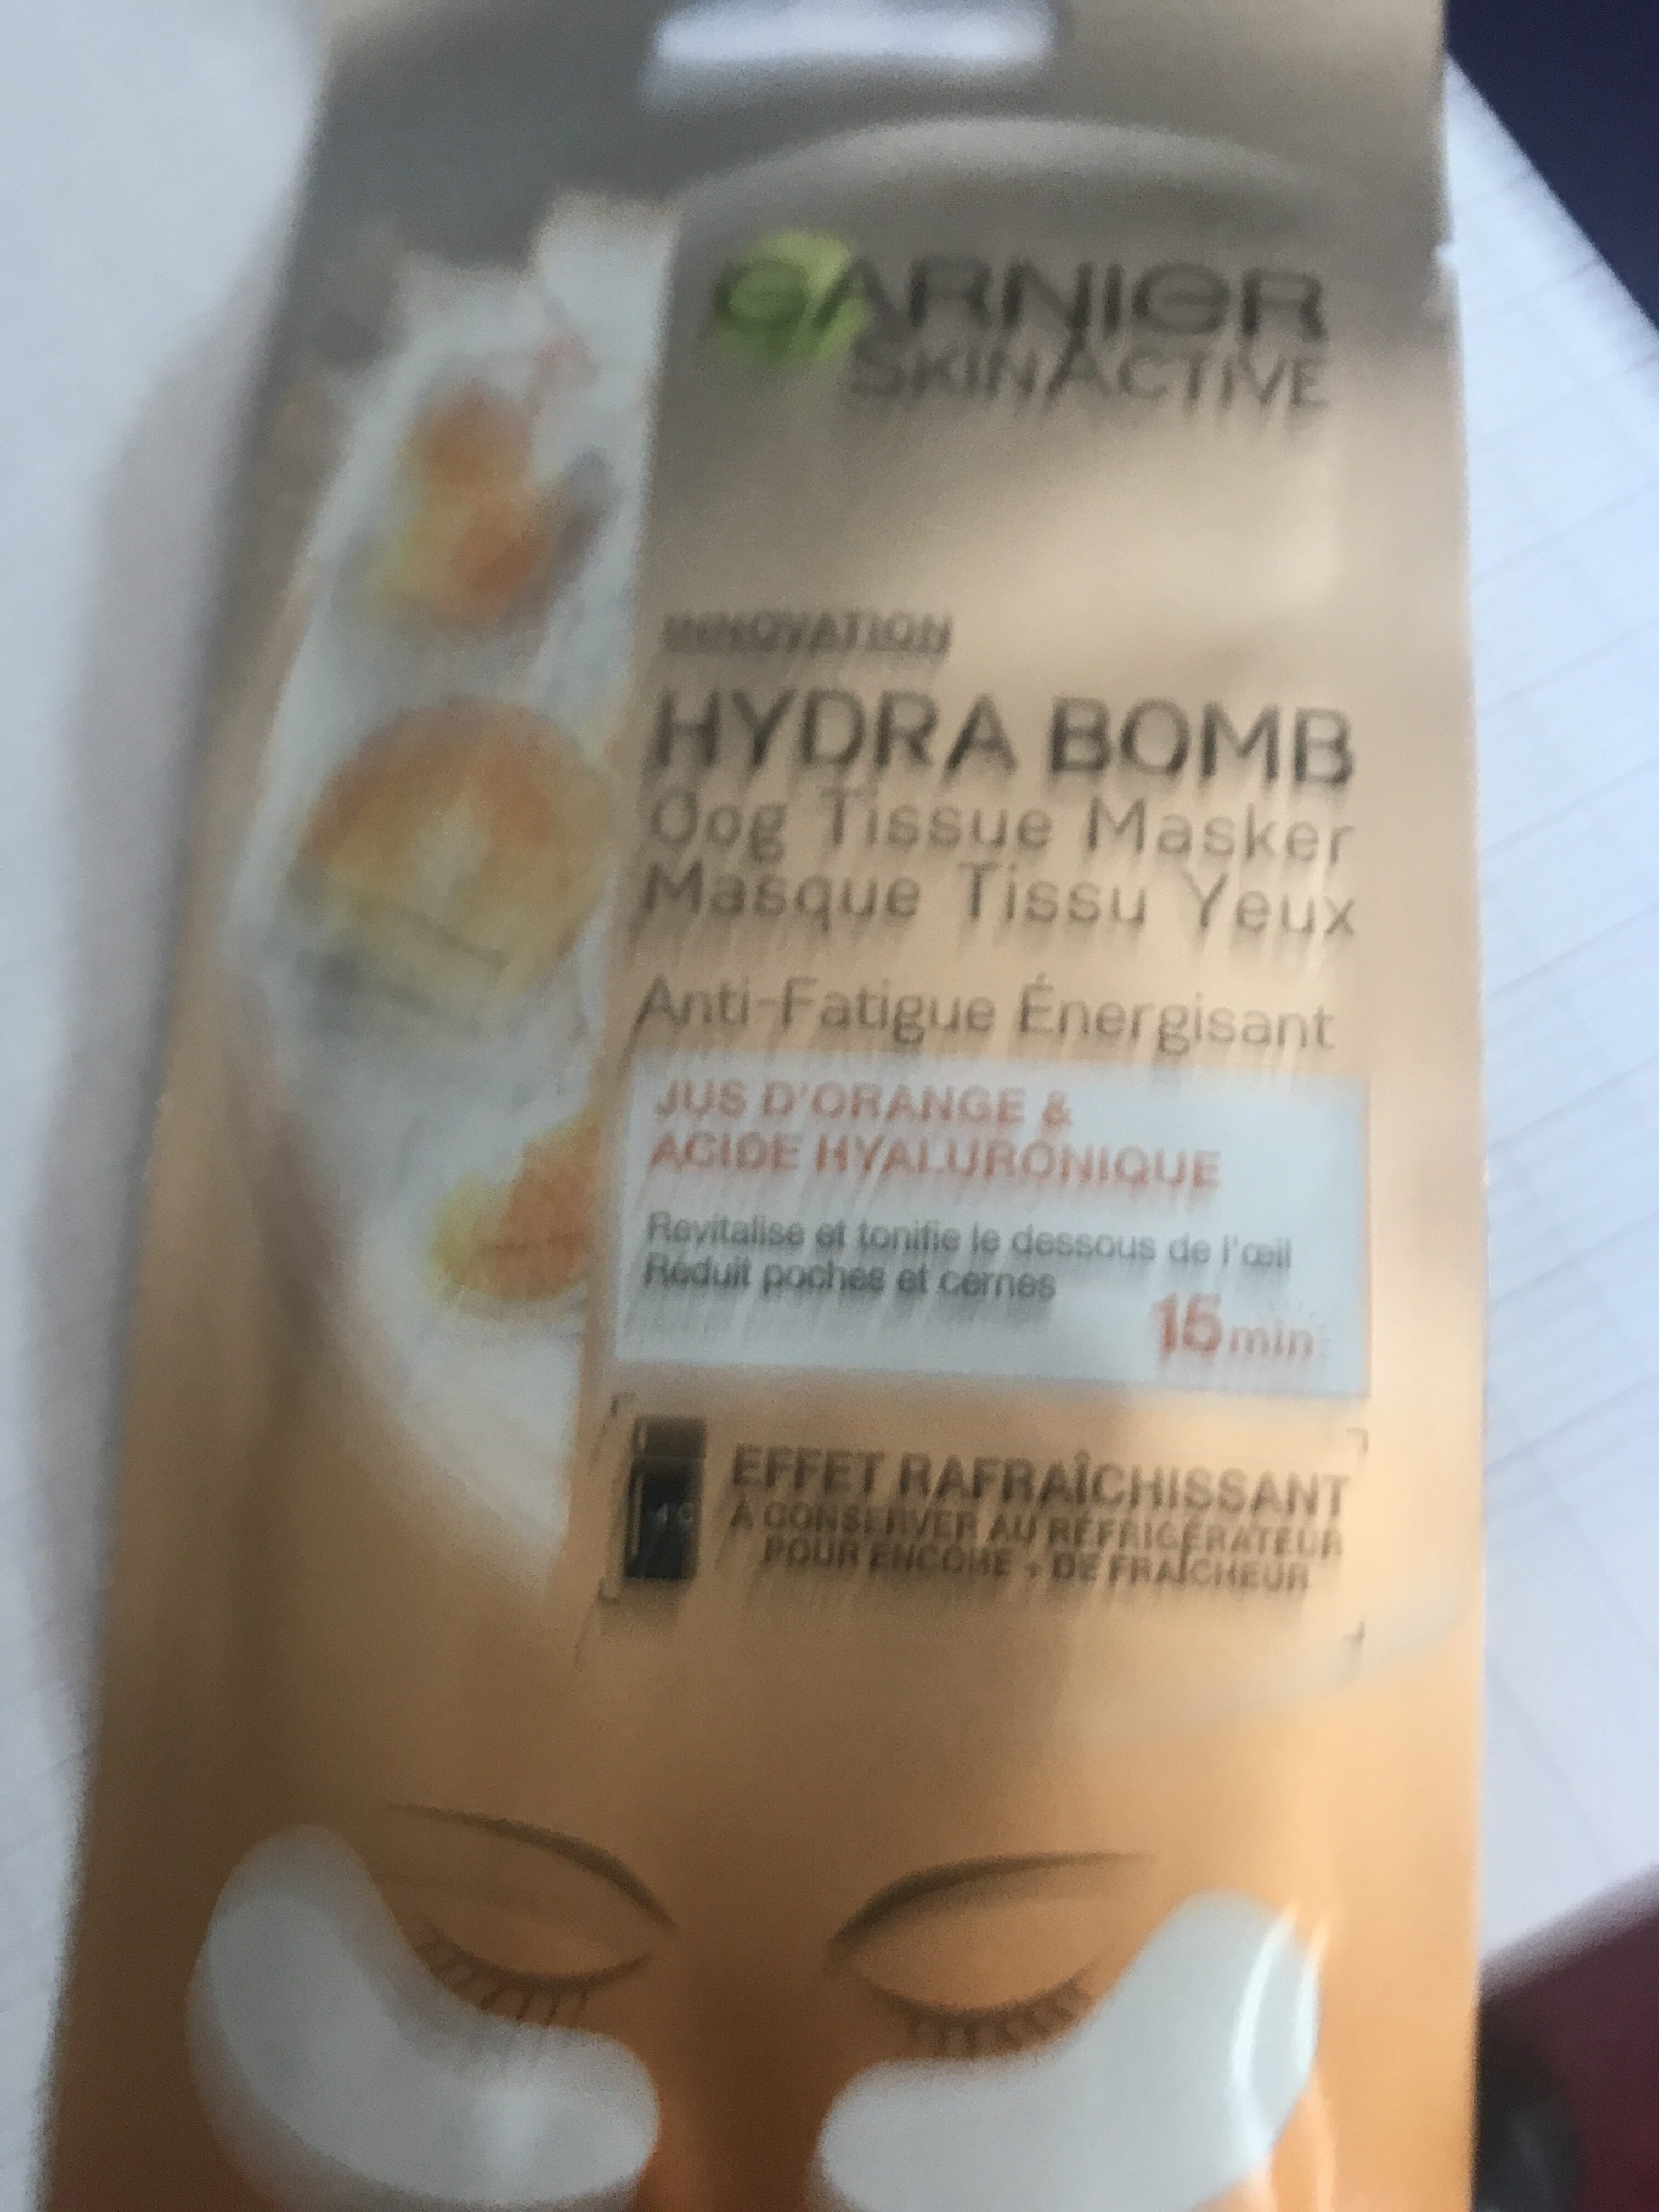 SkinActive Hydra Bomb Eye Masque, x2 - Product - en